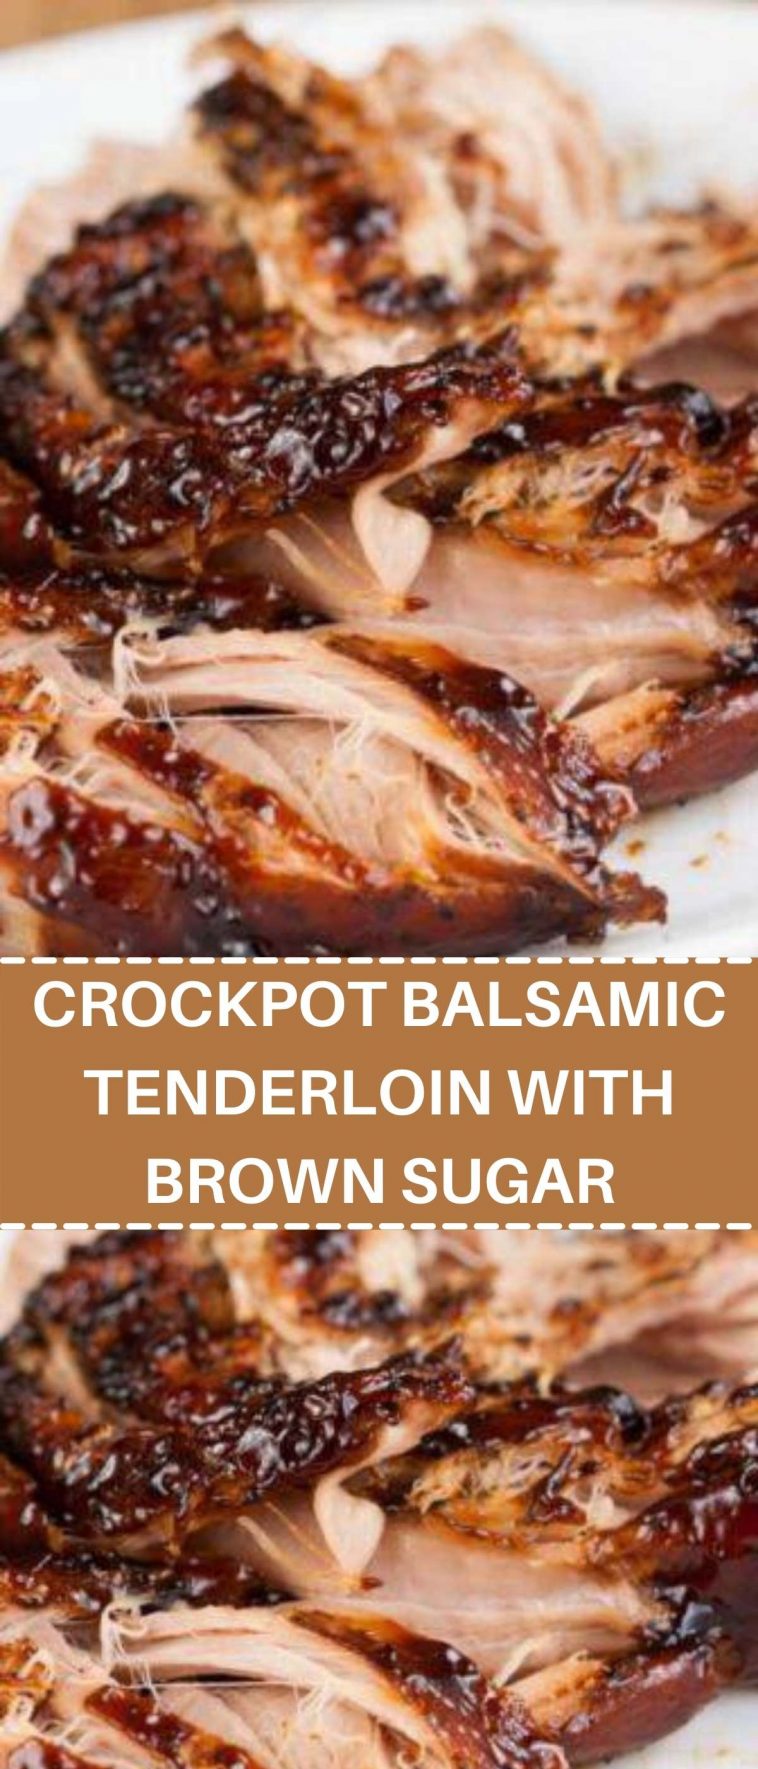 CROCKPOT BALSAMIC TENDERLOIN WITH BROWN SUGAR